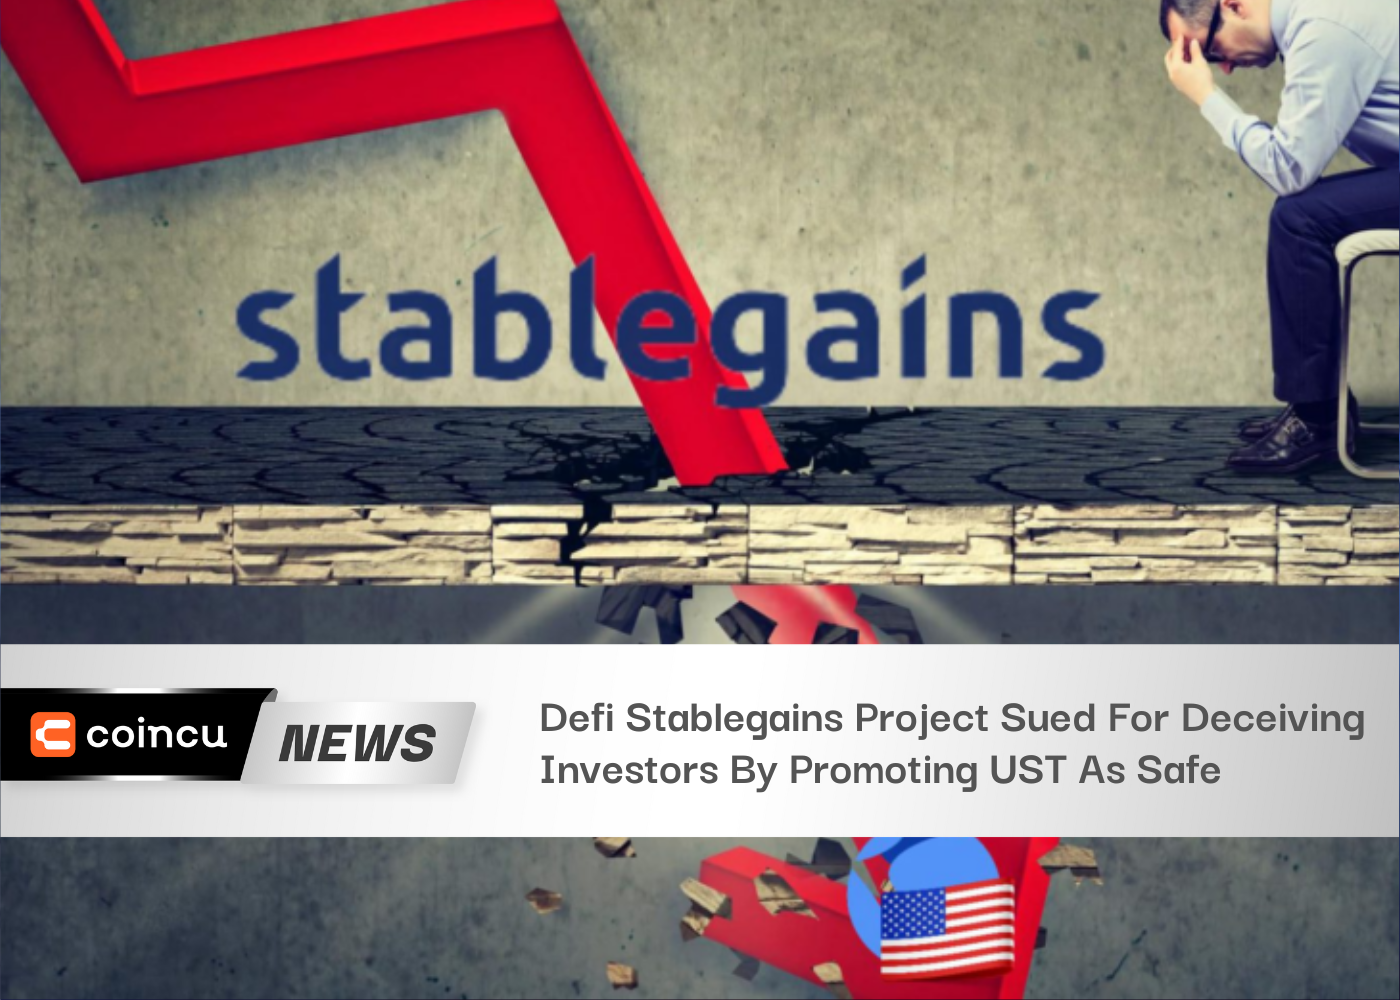 Defi Stablegains 项目因宣传 UST 安全而欺骗投资者而被起诉